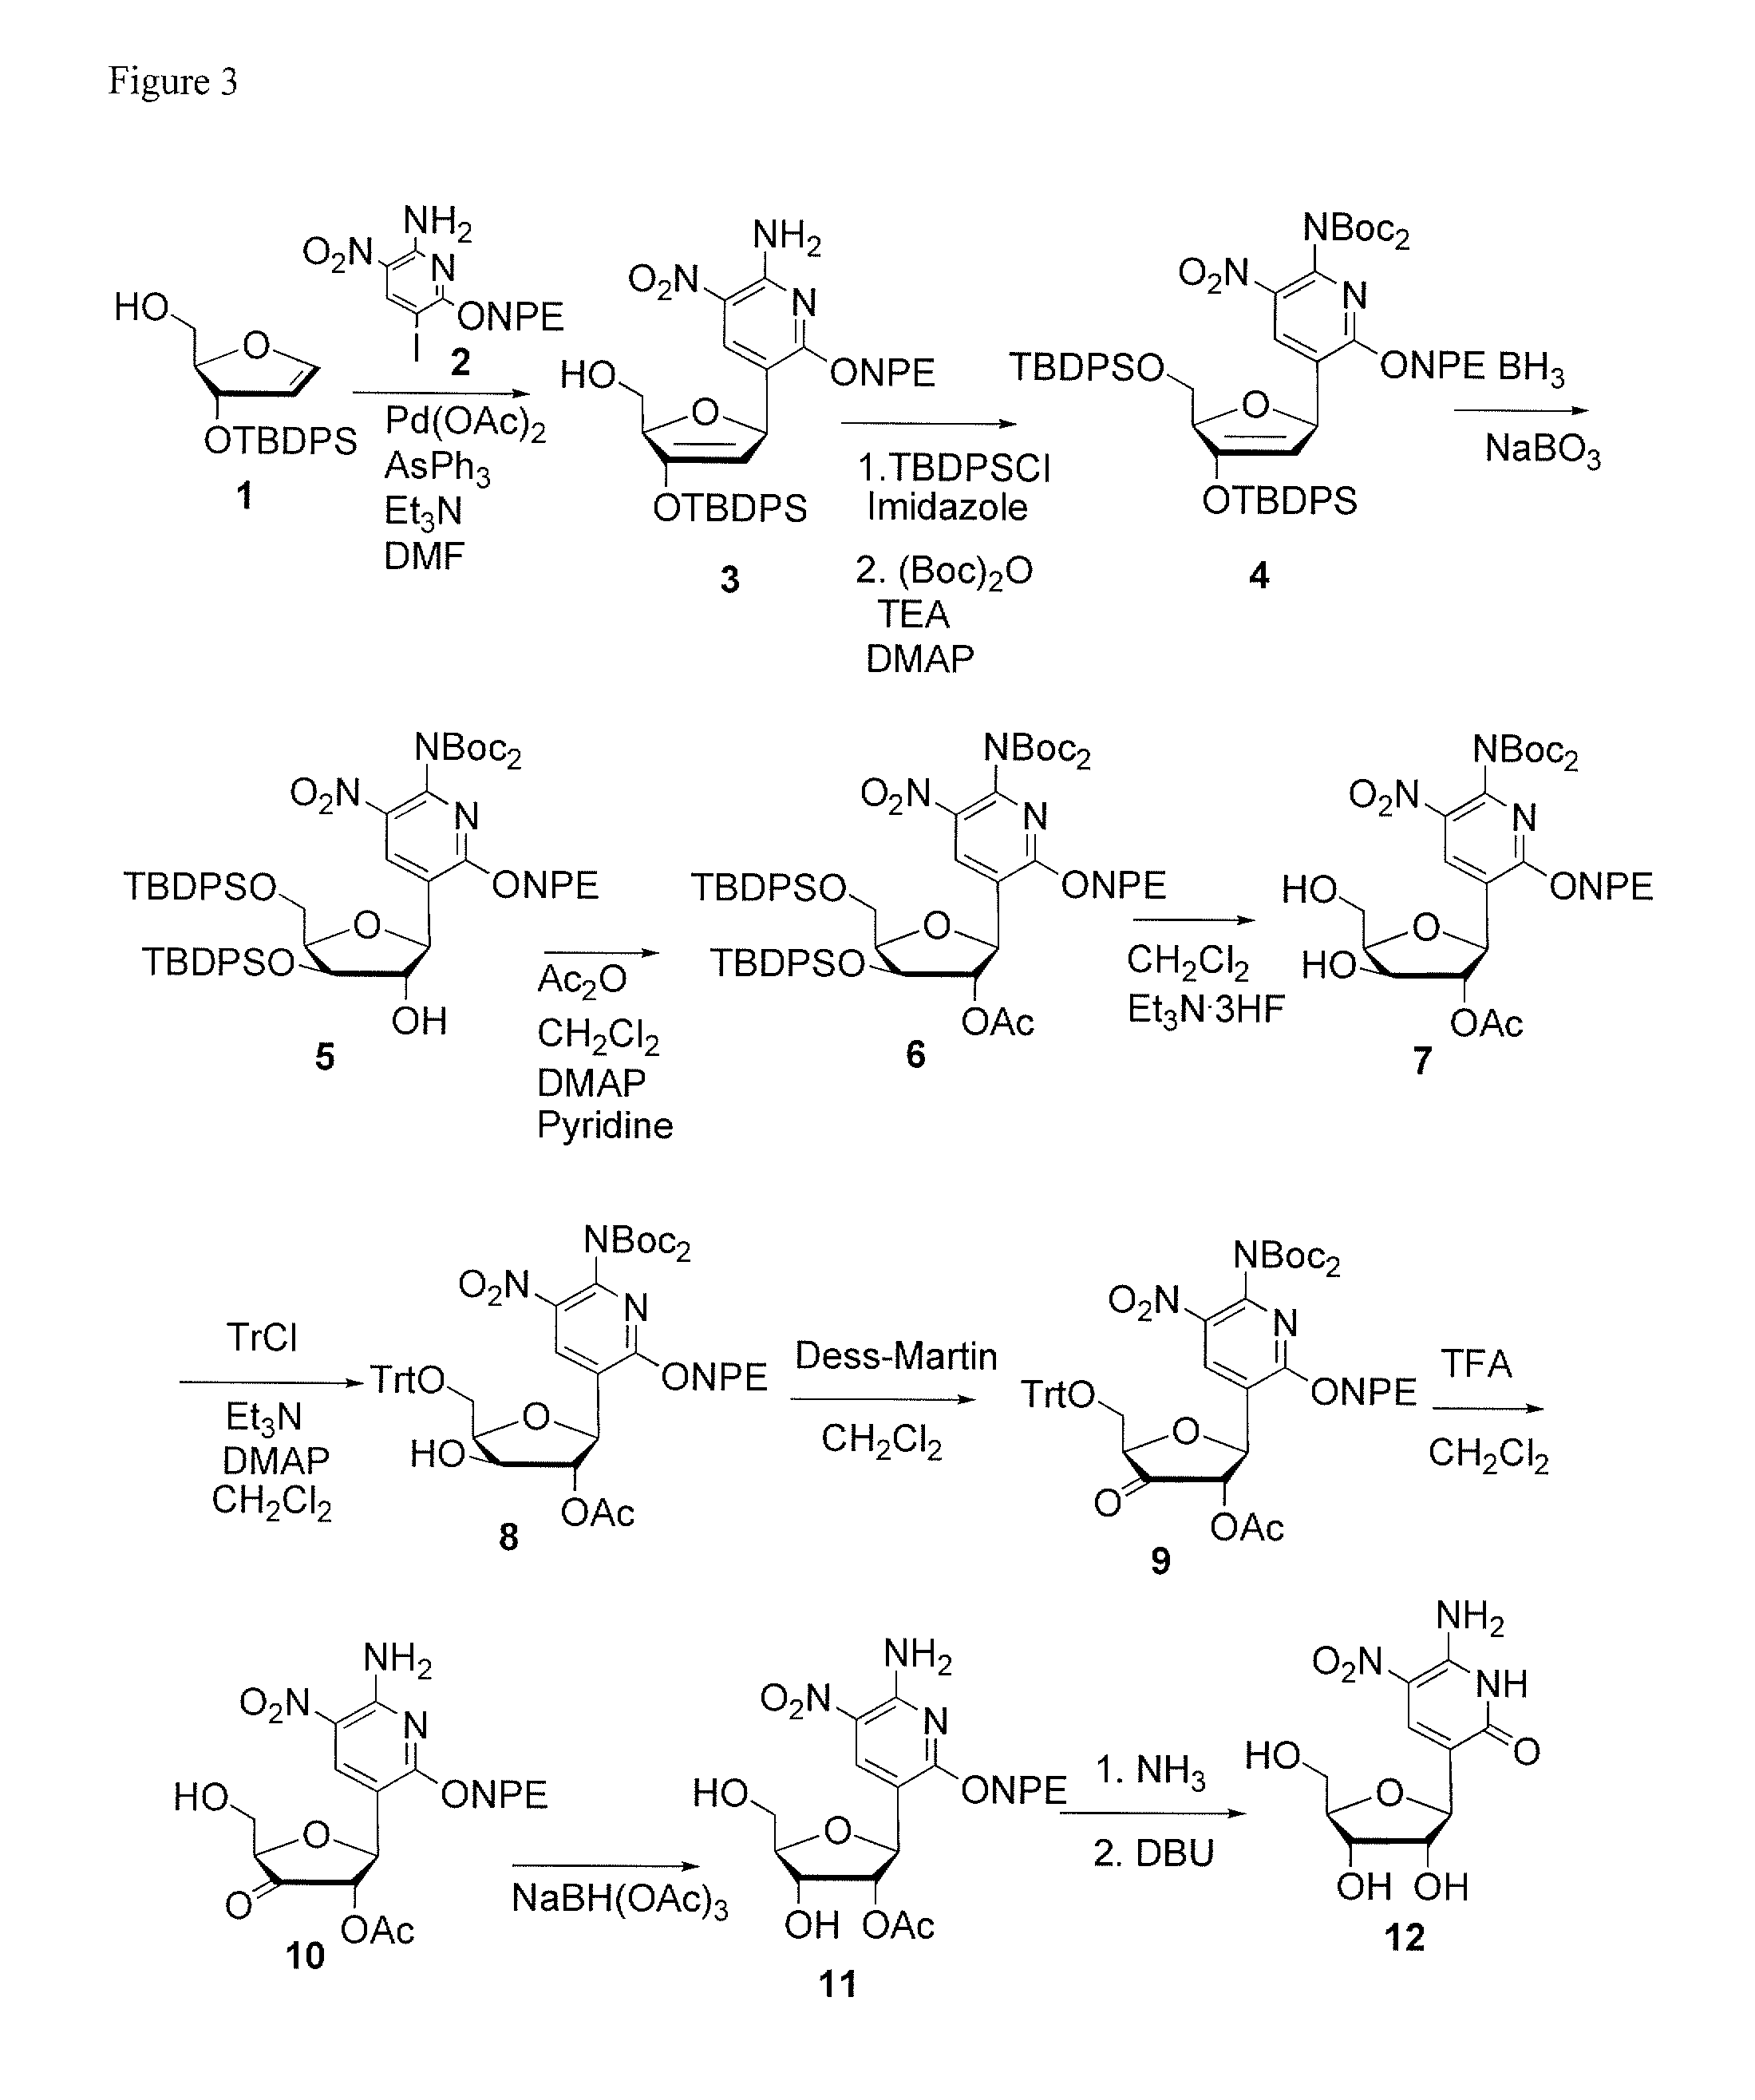 Ribonucleoside analogs with novel hydrogen bonding patterns